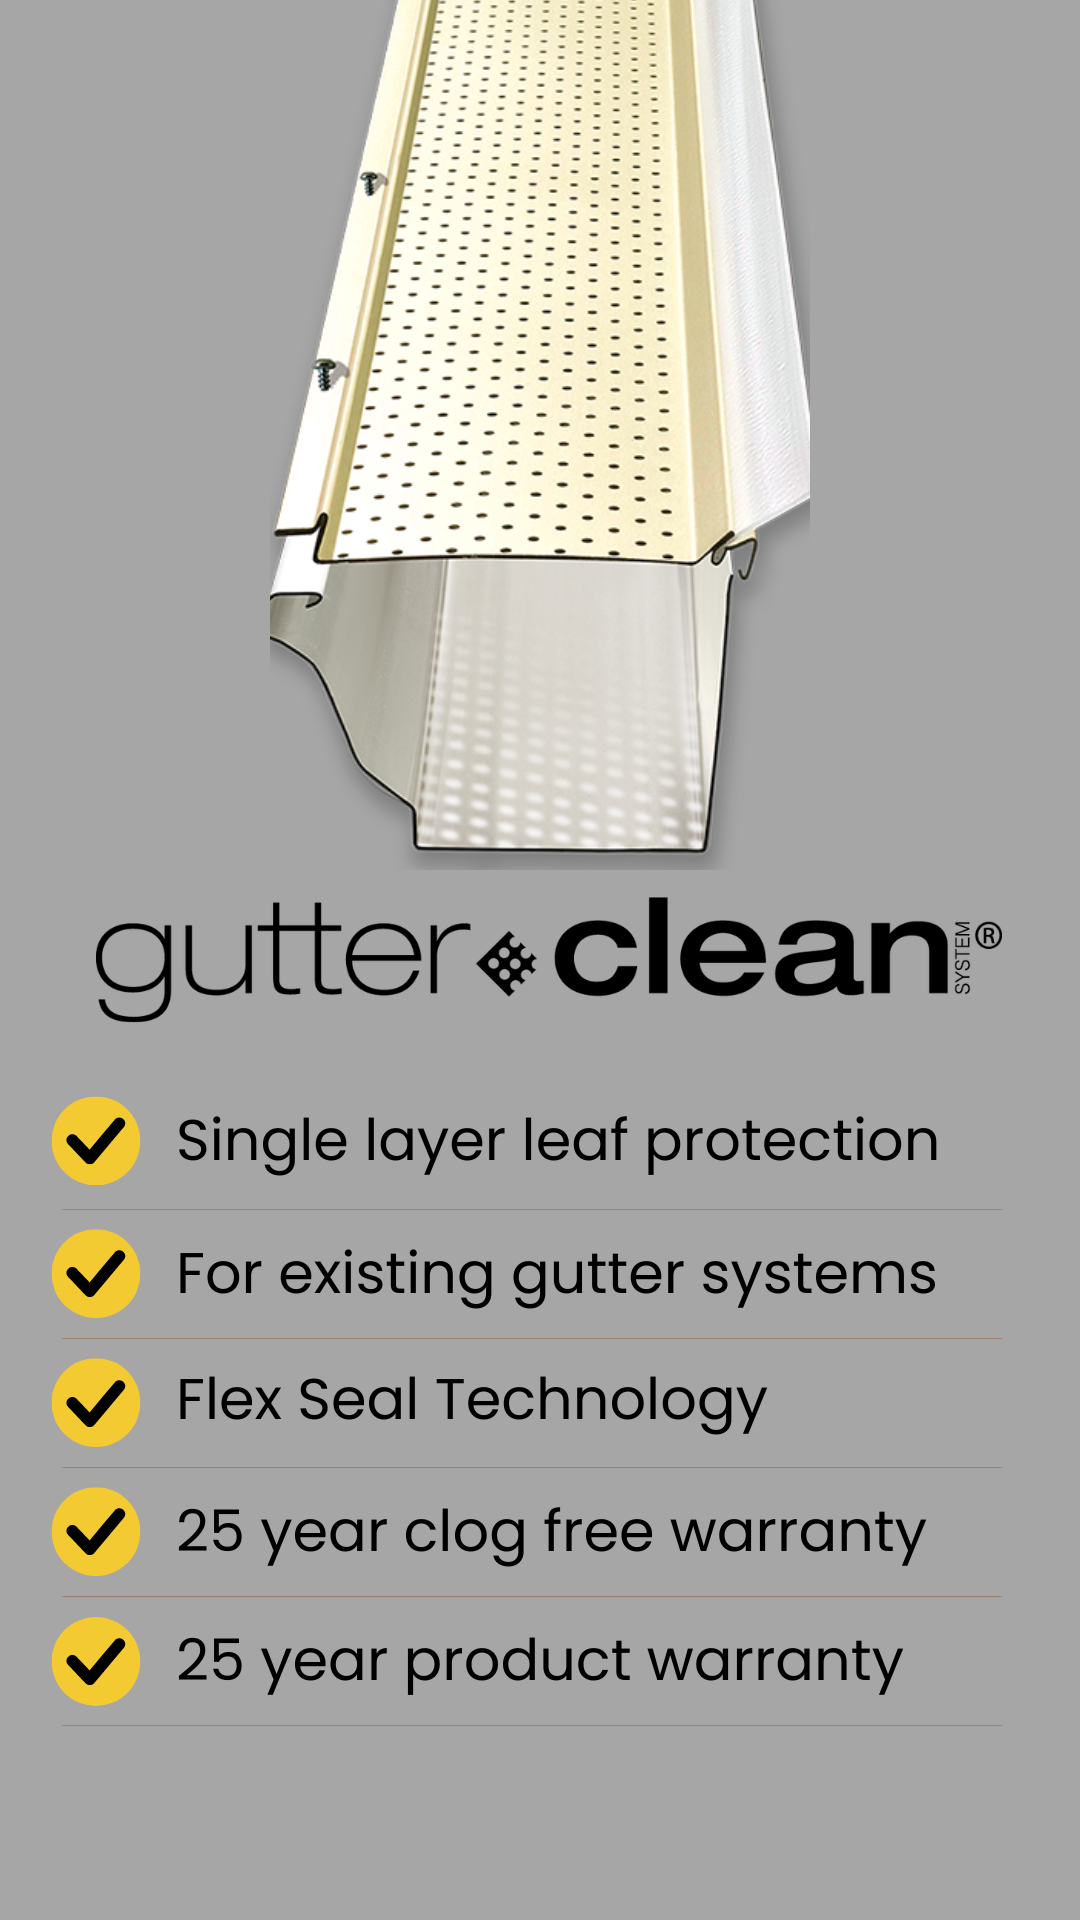 gutter-clean gutter cover product comparison image